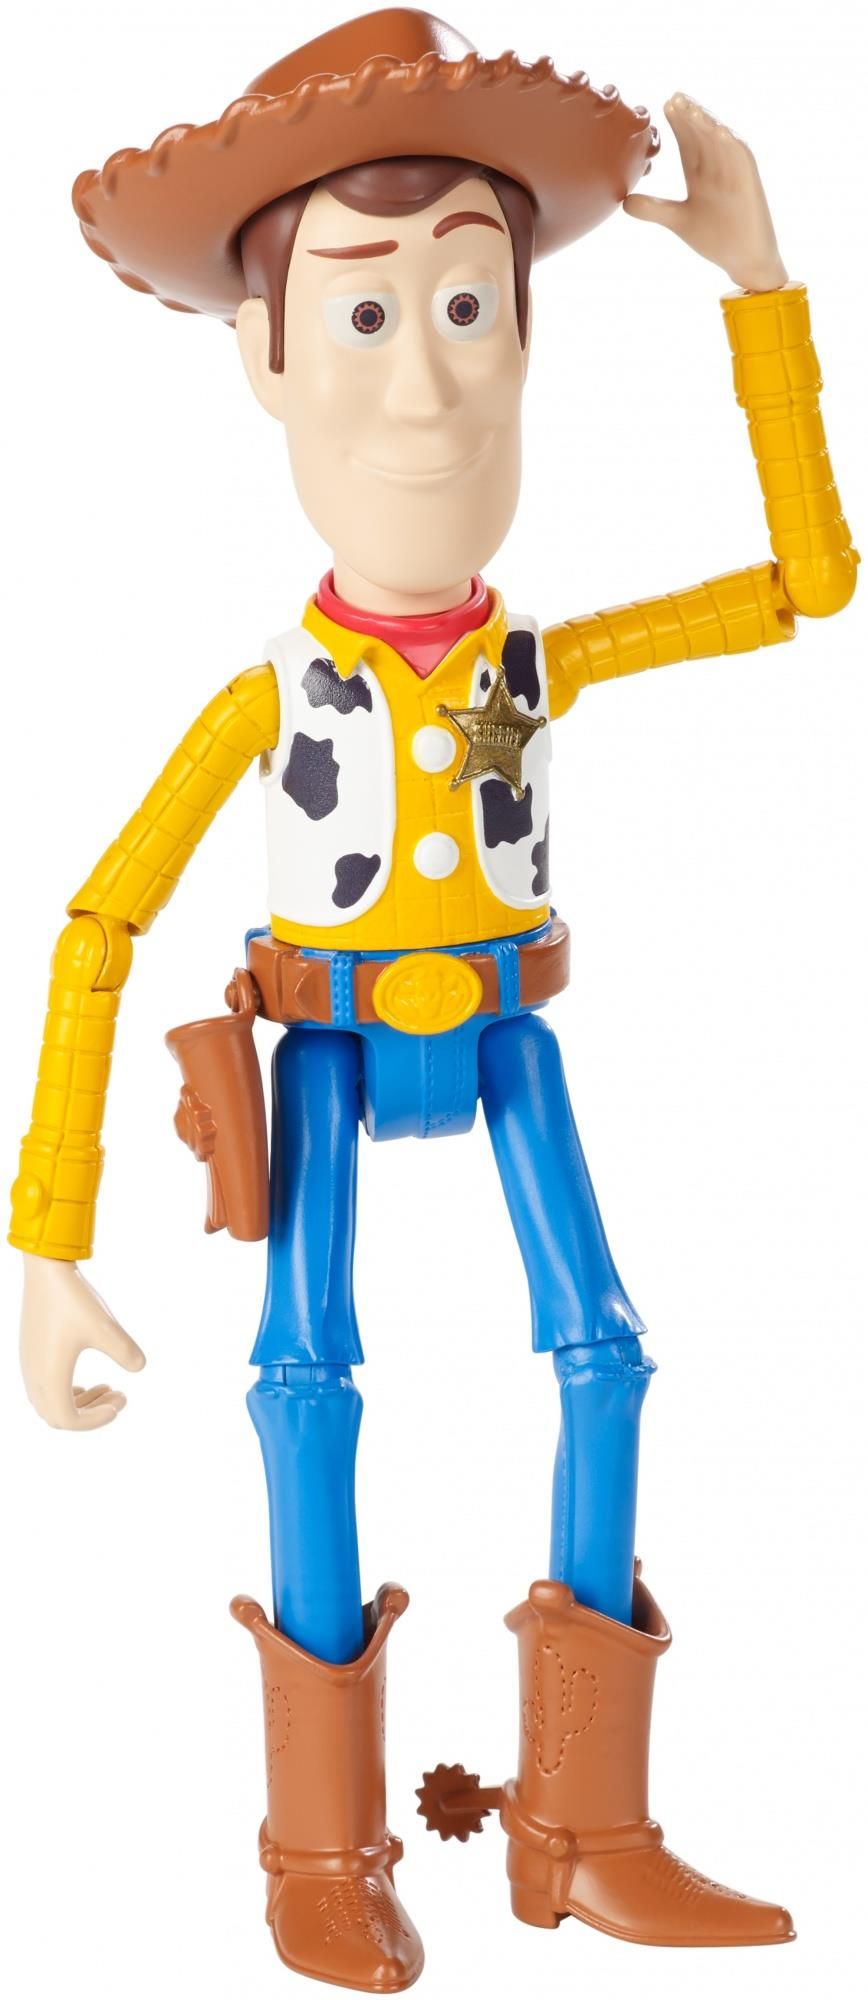 Mattel Action Figure Toy